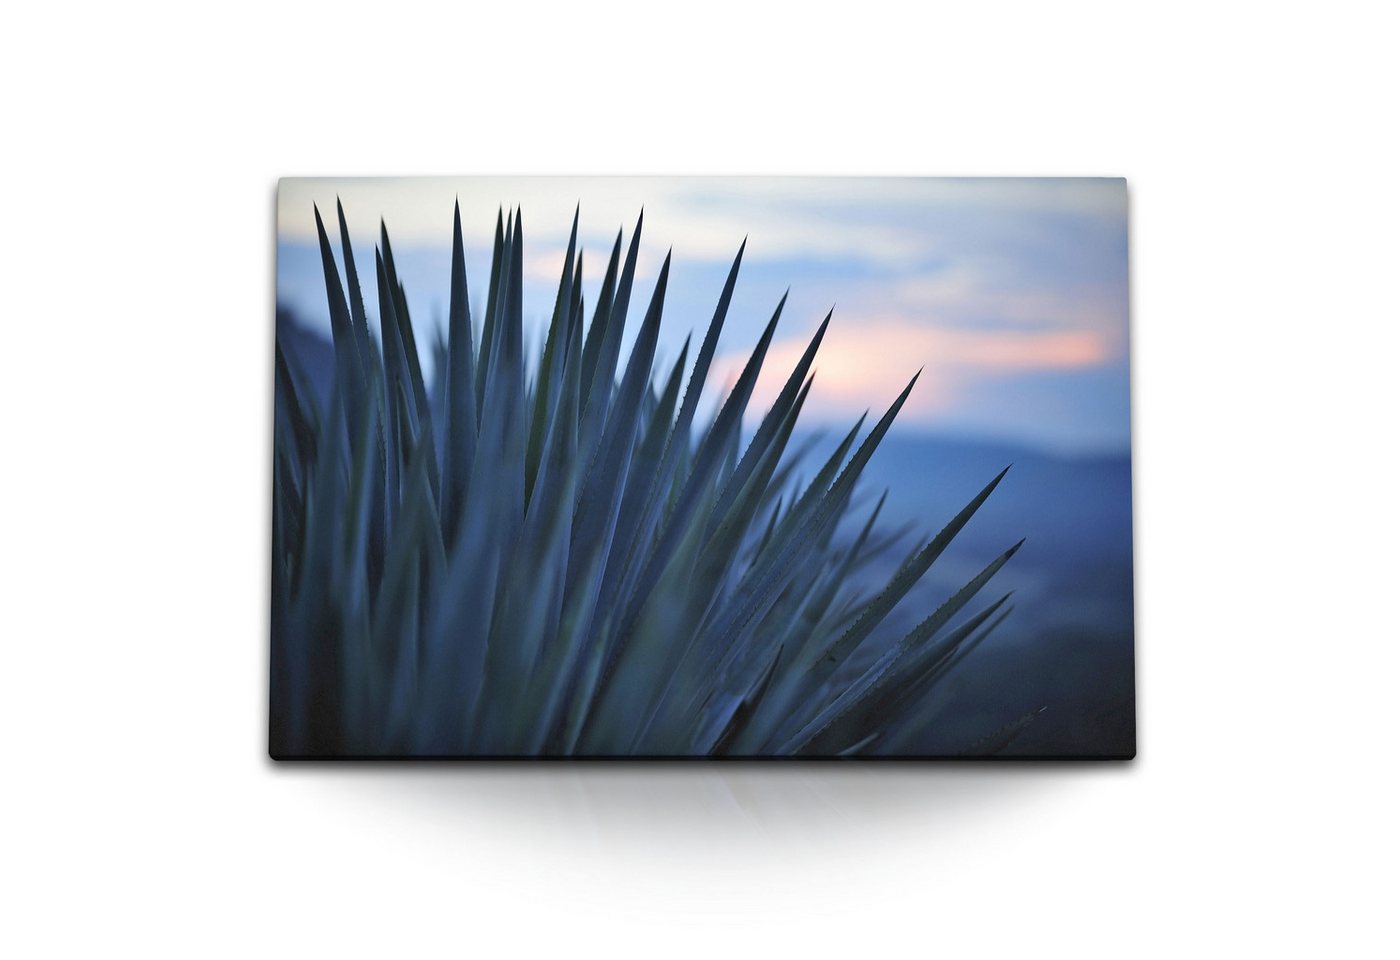 Sinus Art Leinwandbild 120x80cm Wandbild auf Leinwand Kaktus Pflanze Stachelpflanze Grün Sonn, (1 St) von Sinus Art